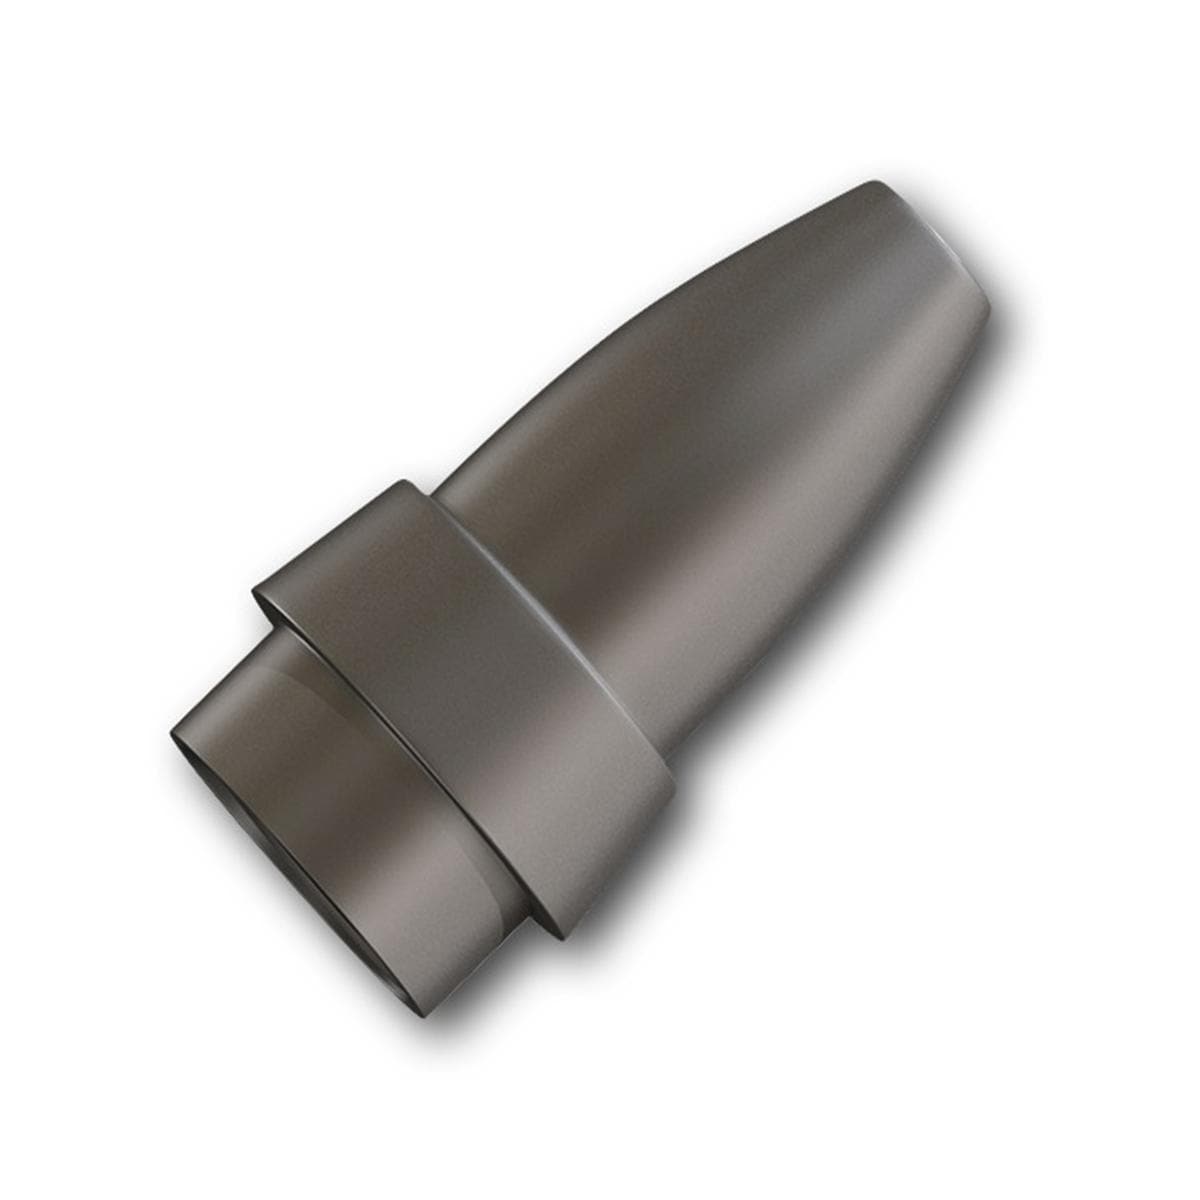 Crystal Tip O-ring kit - Luzzani Minilight - ORK 1050